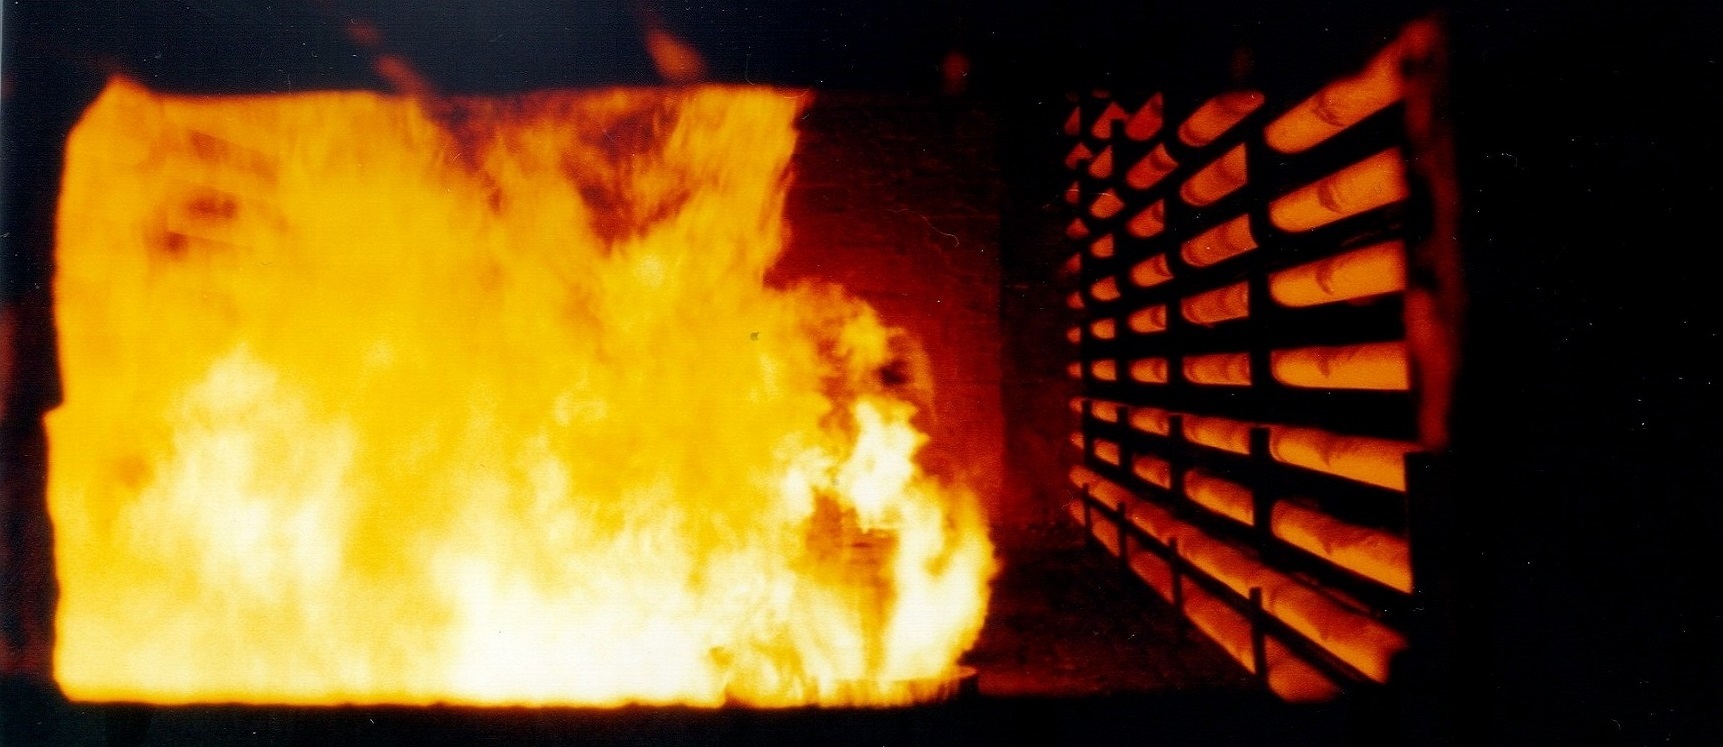 Inside Cabin Fired Heater, Inside Heater, Inside Furnace, Inside API 560 Cabin Heater, Cabin Heater with Horizontal Tubes, Burners Firing Inside Fired Heater, Burner Flames Inside Fired Heater